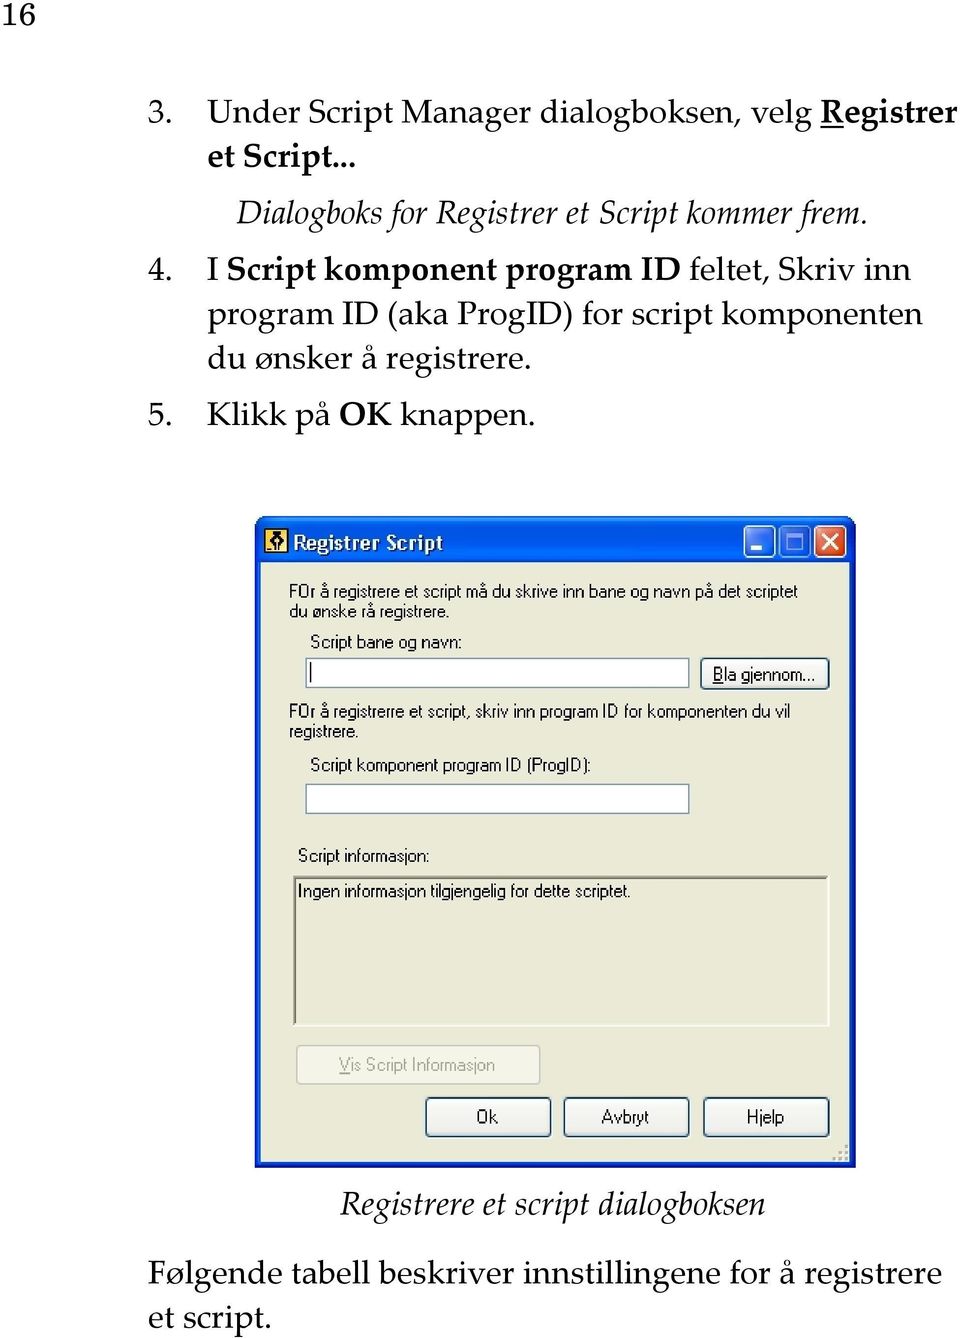 I Script komponent program ID feltet, Skriv inn program ID (aka ProgID) for script